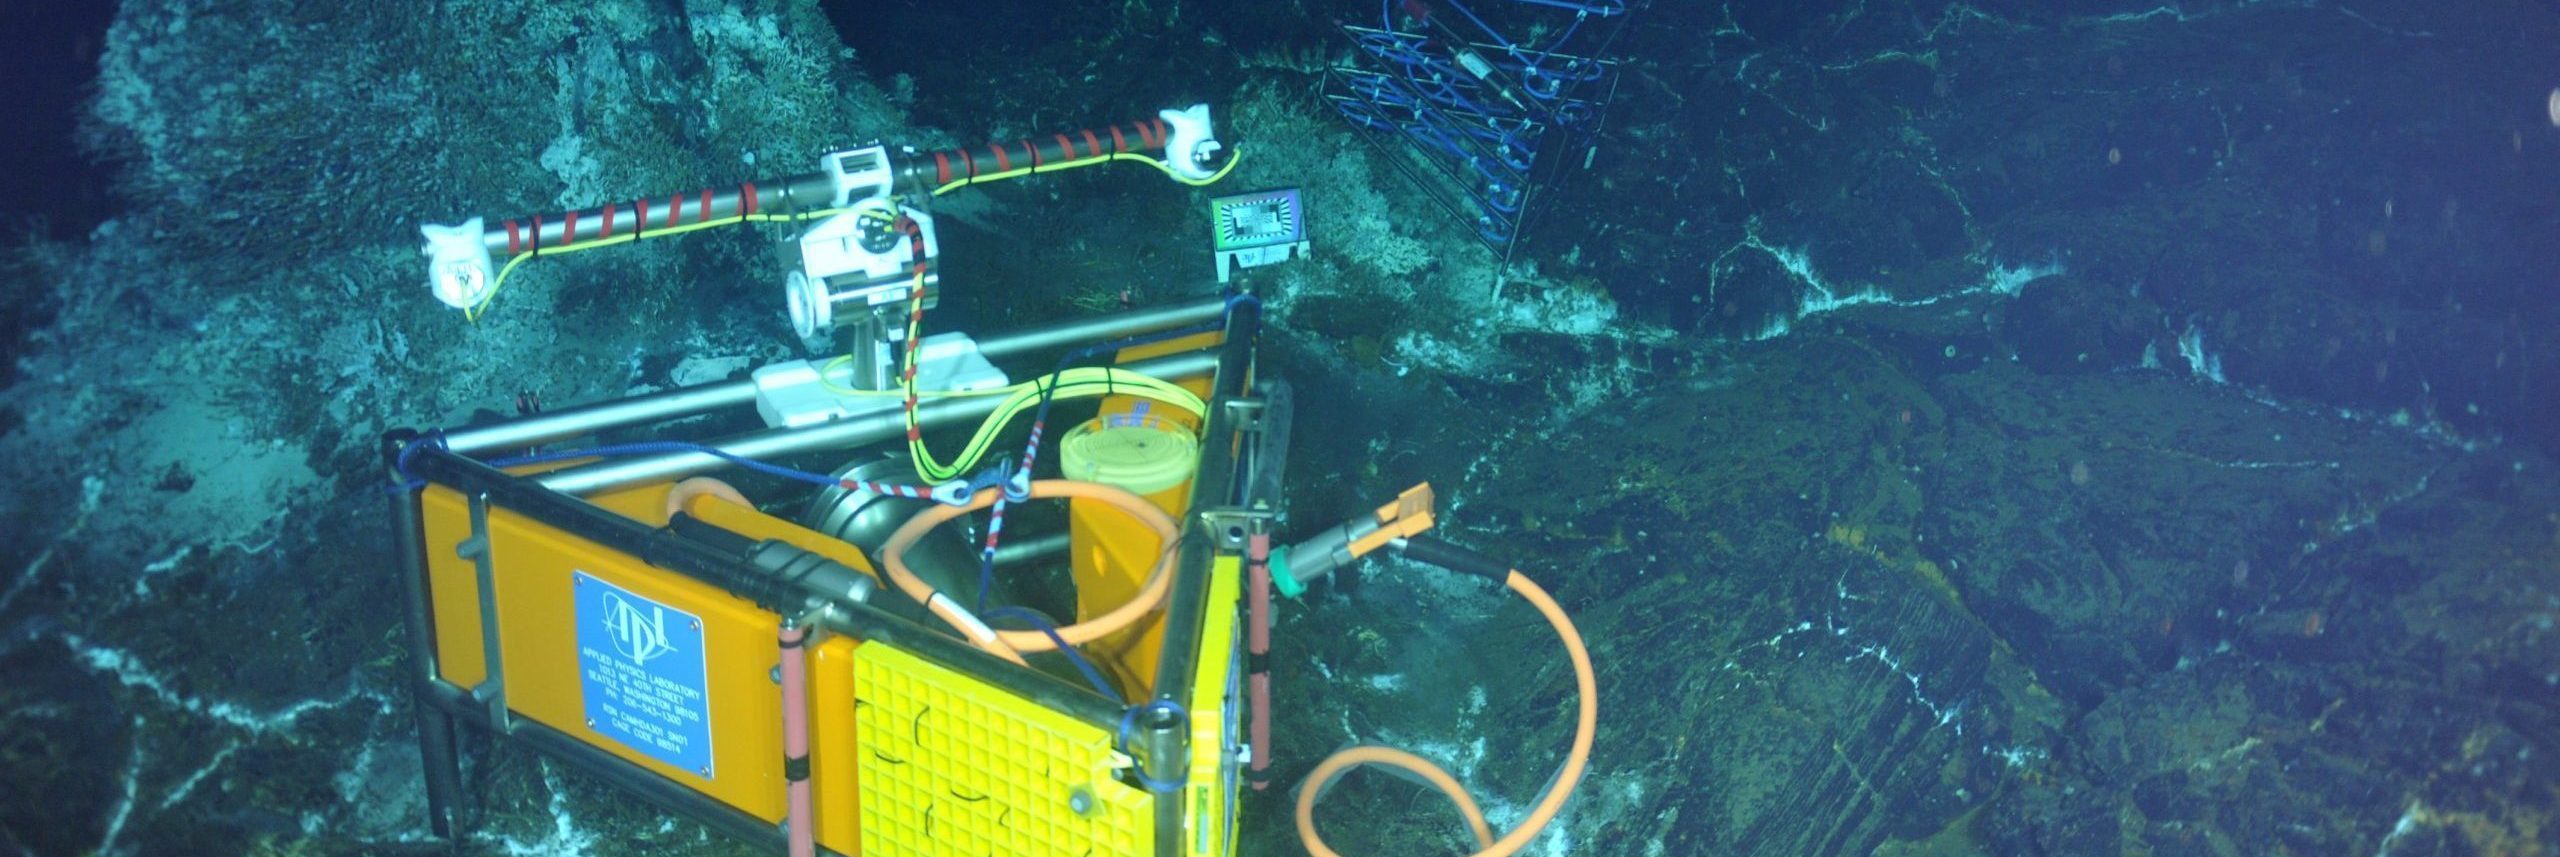 subc imaging marine observatory camera video